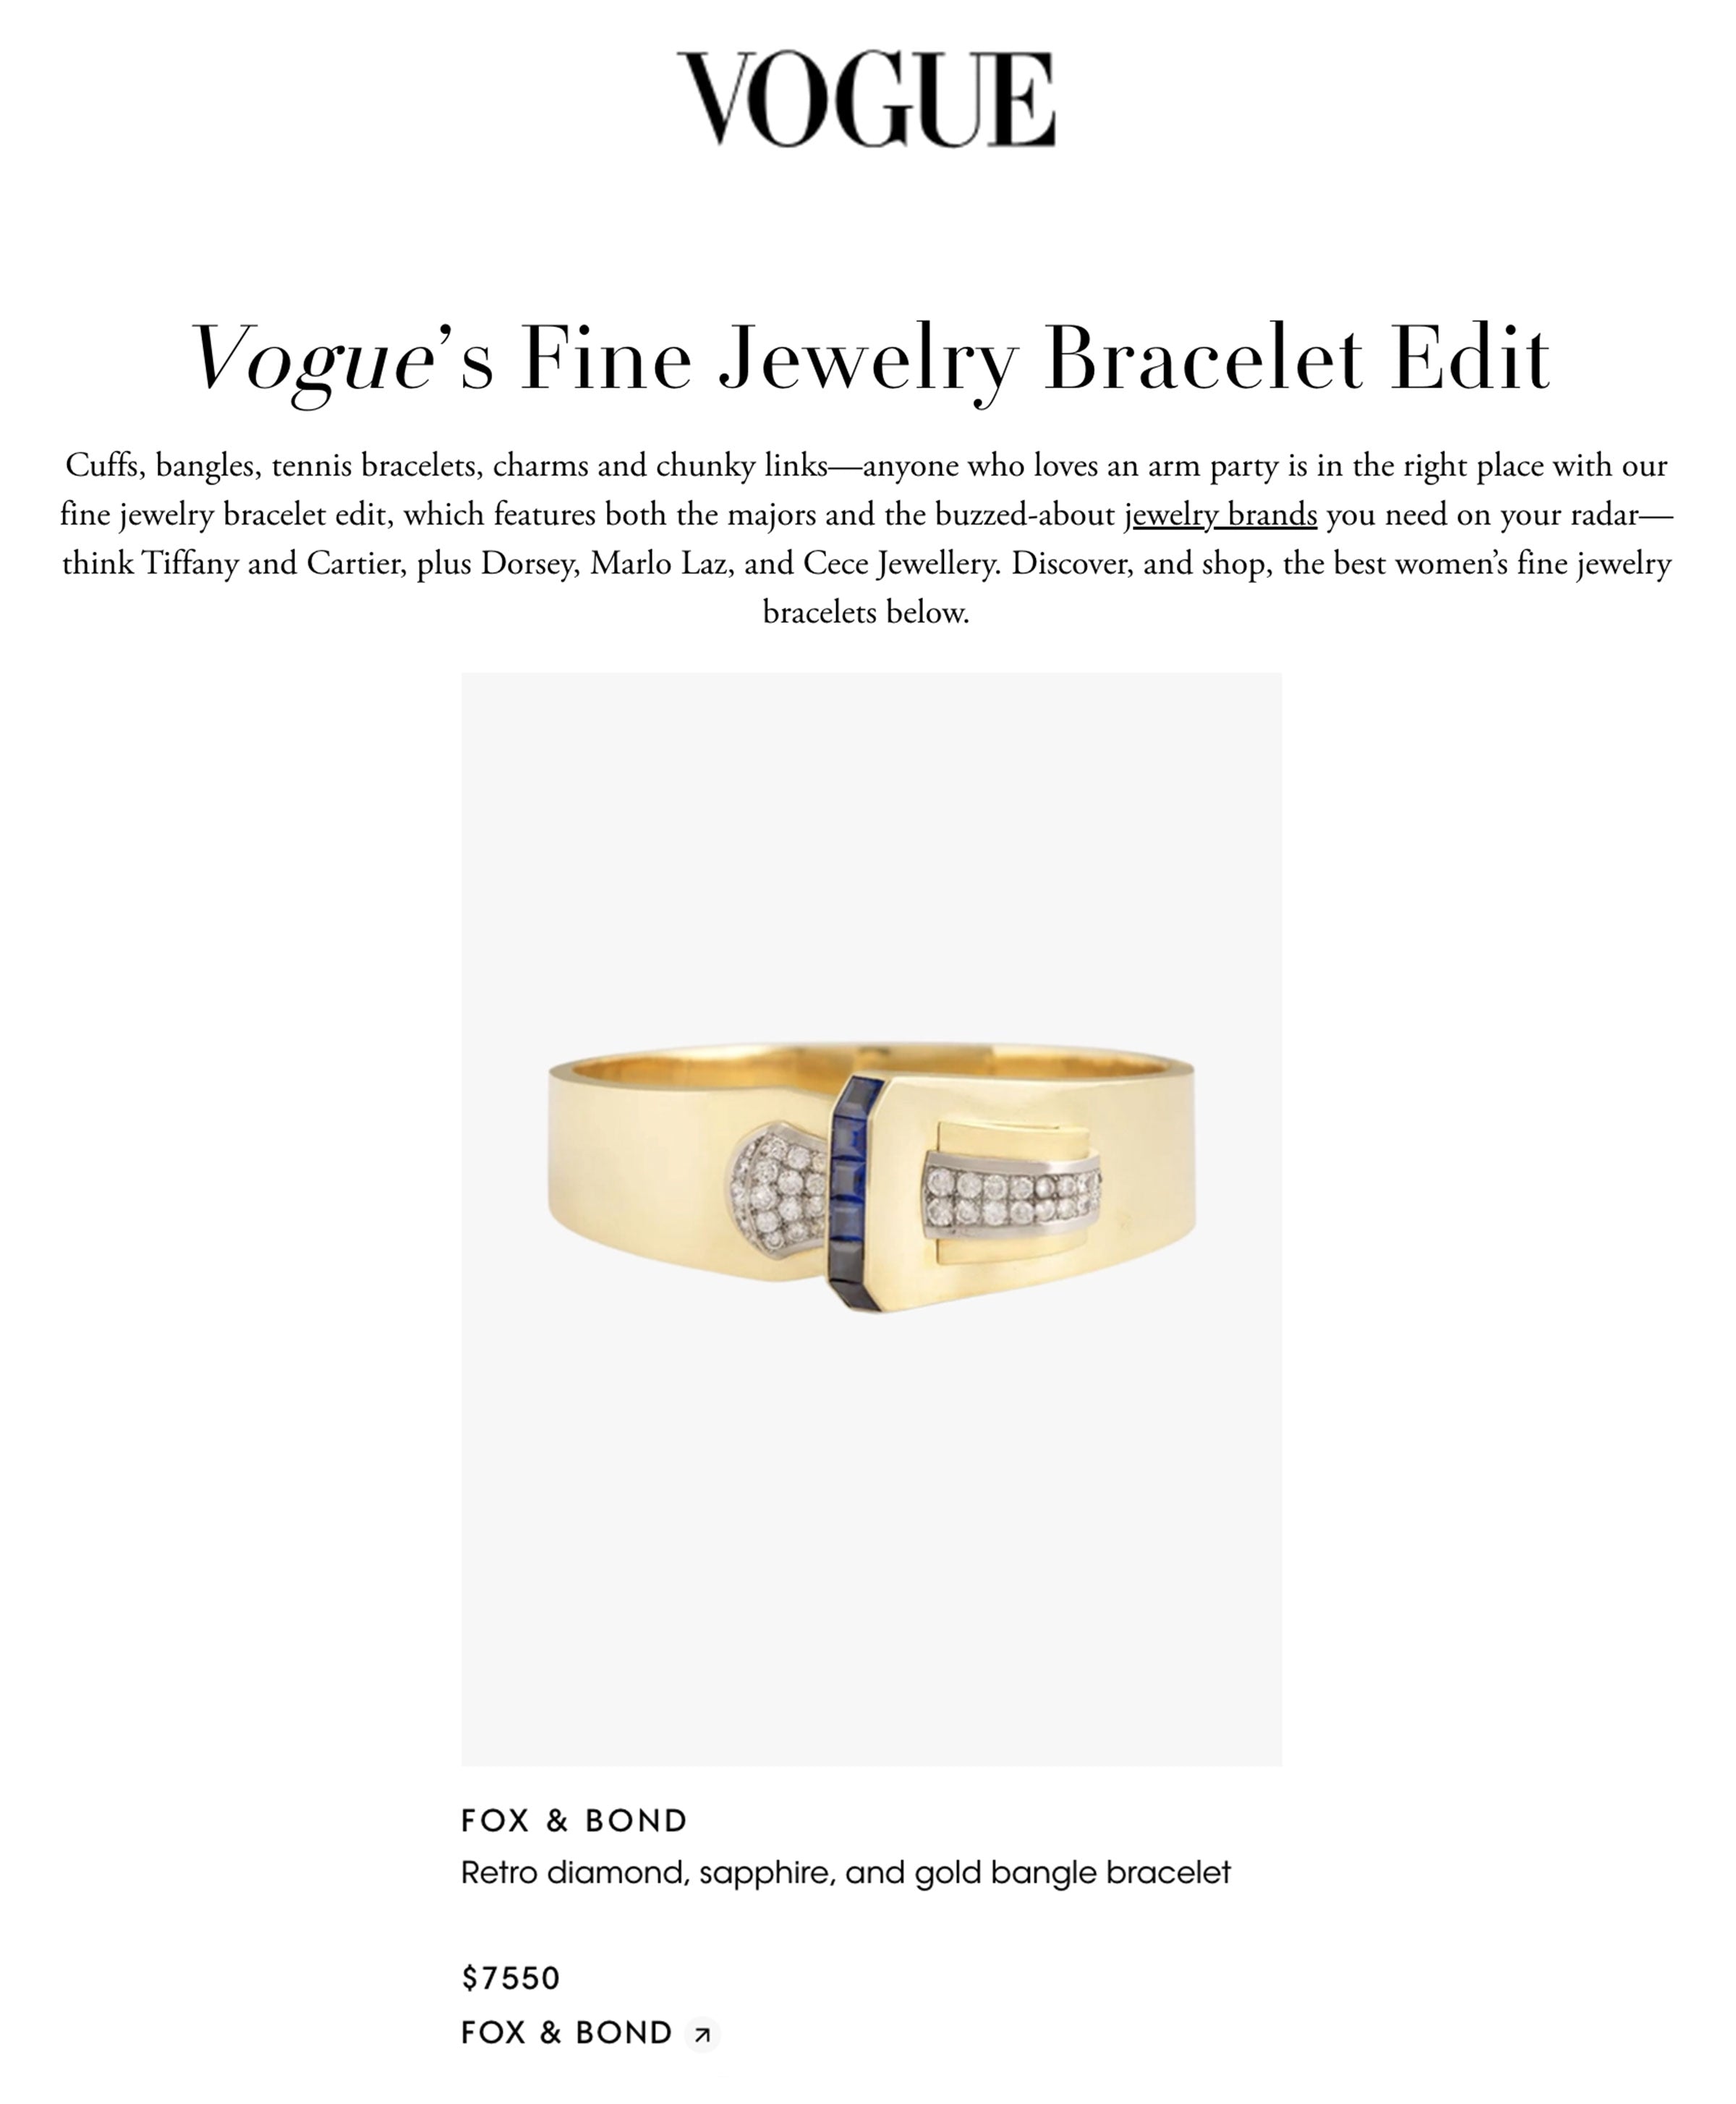 Vogue’s Fine Jewelry Bracelet Edit